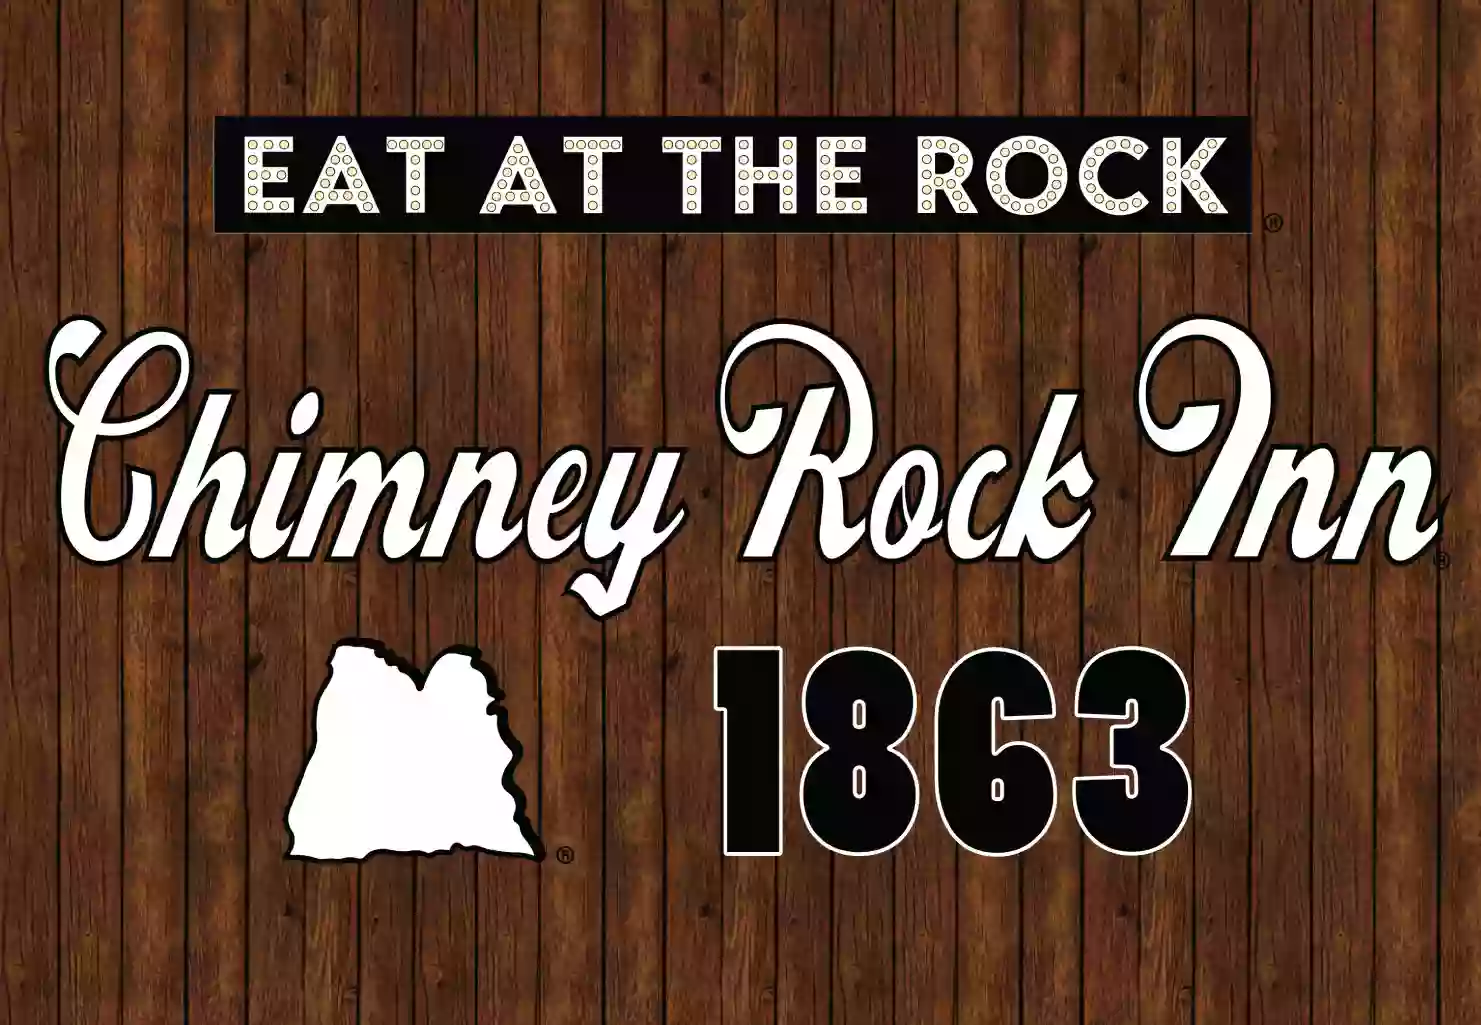 Chimney Rock Inn Flemington